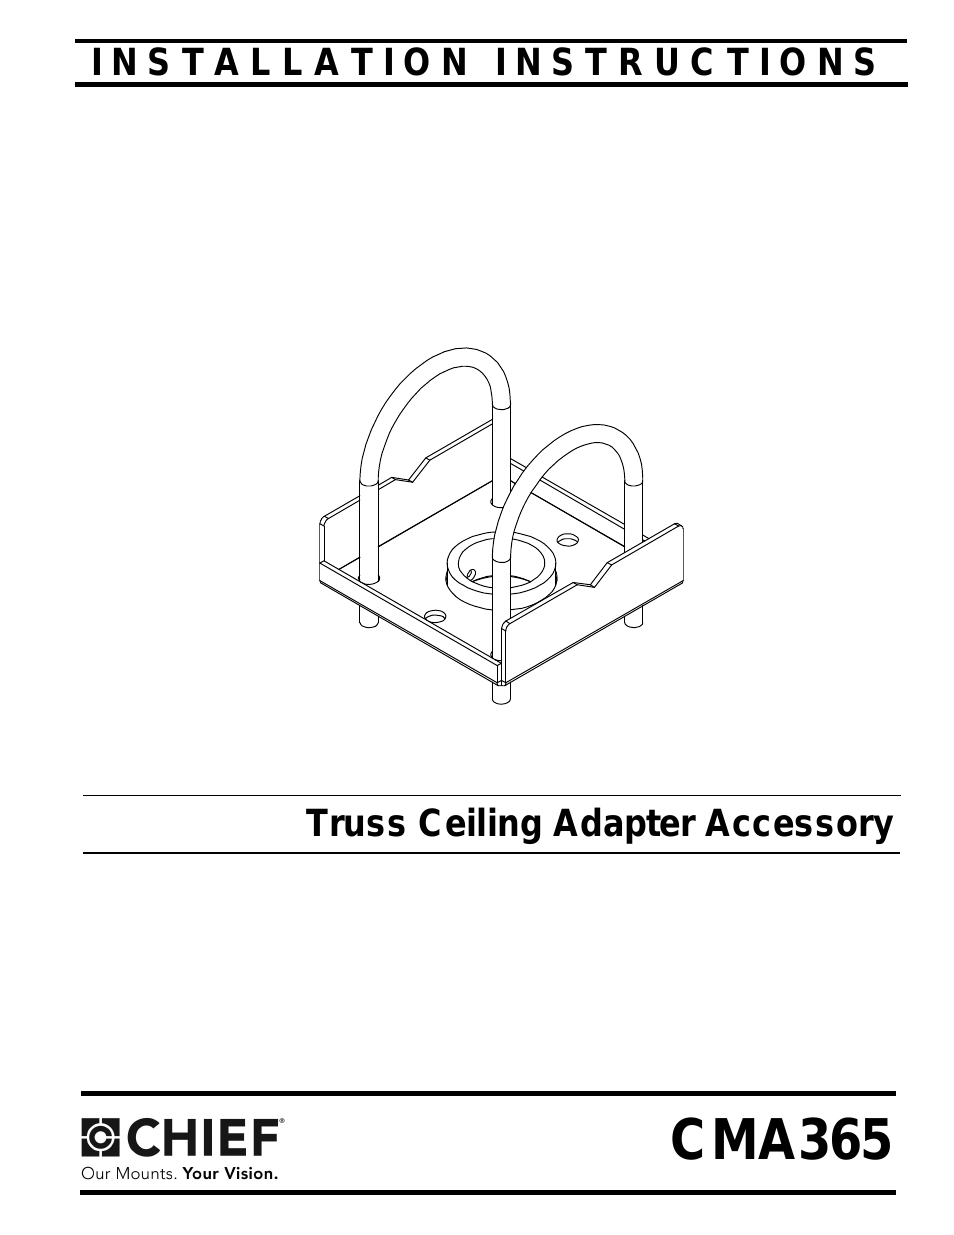 Truss Ceiling Adapter CMA365